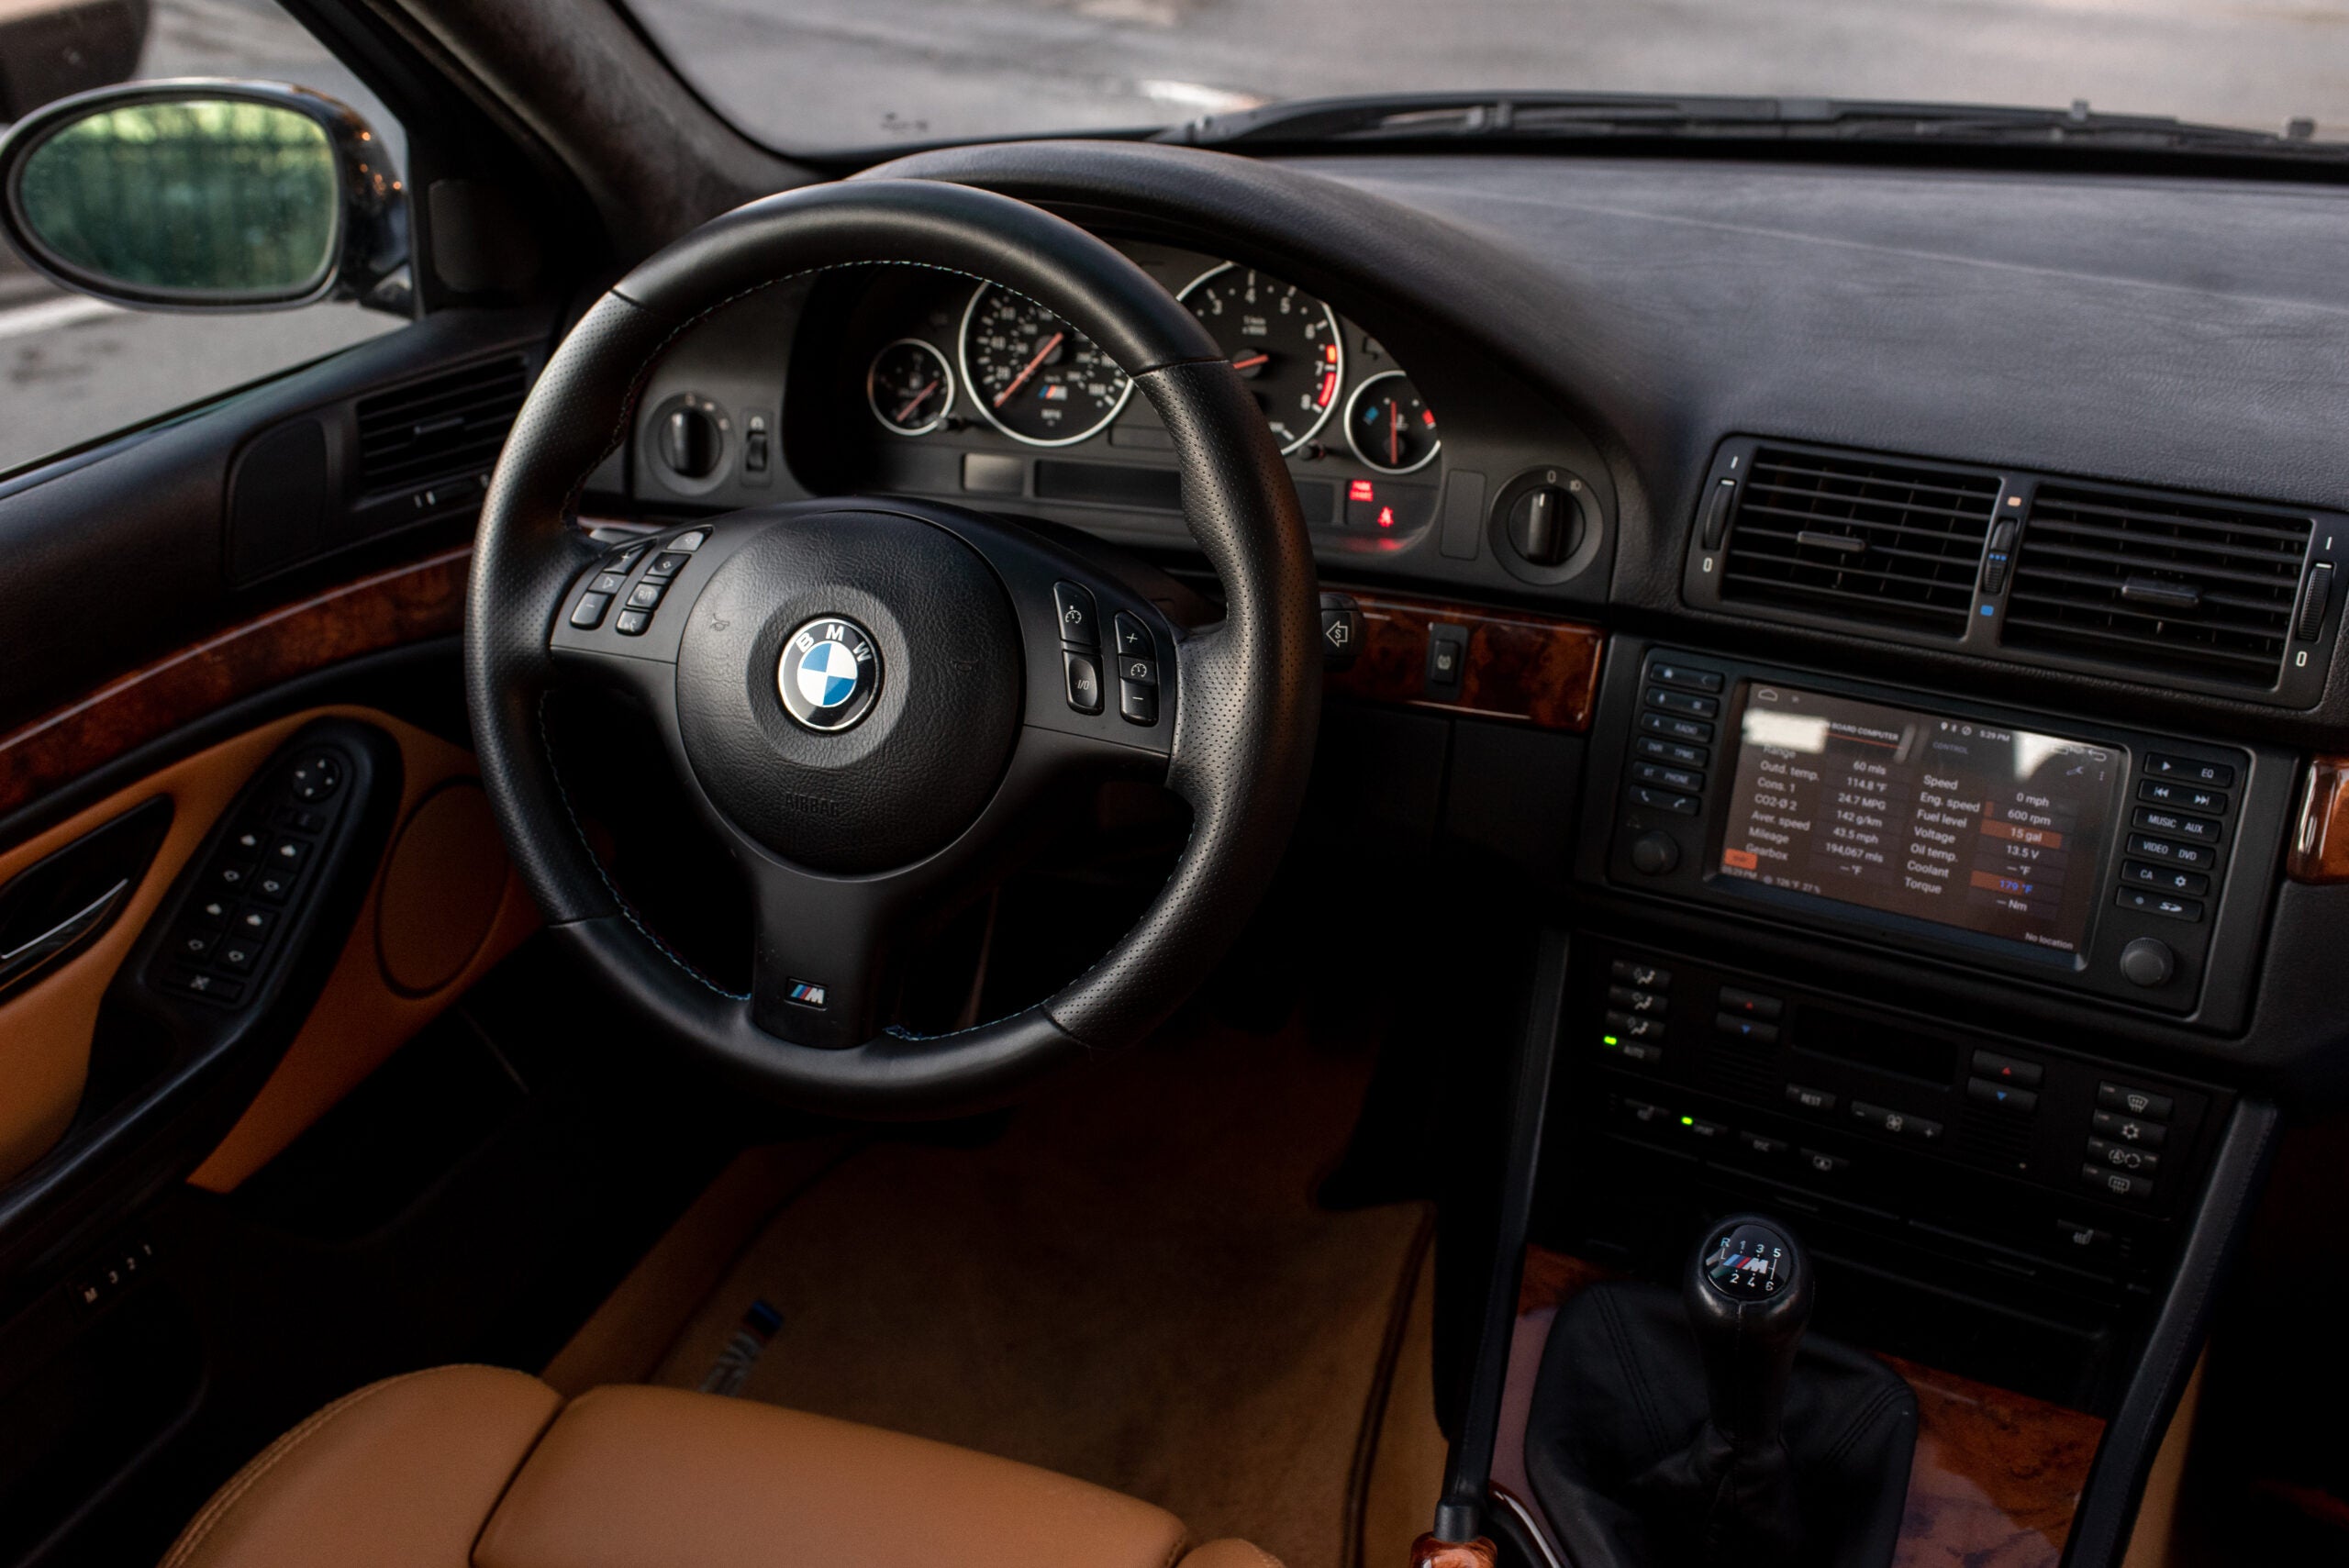 2000 BMW E39 M5 Review: Forever the Peak Super Sedan